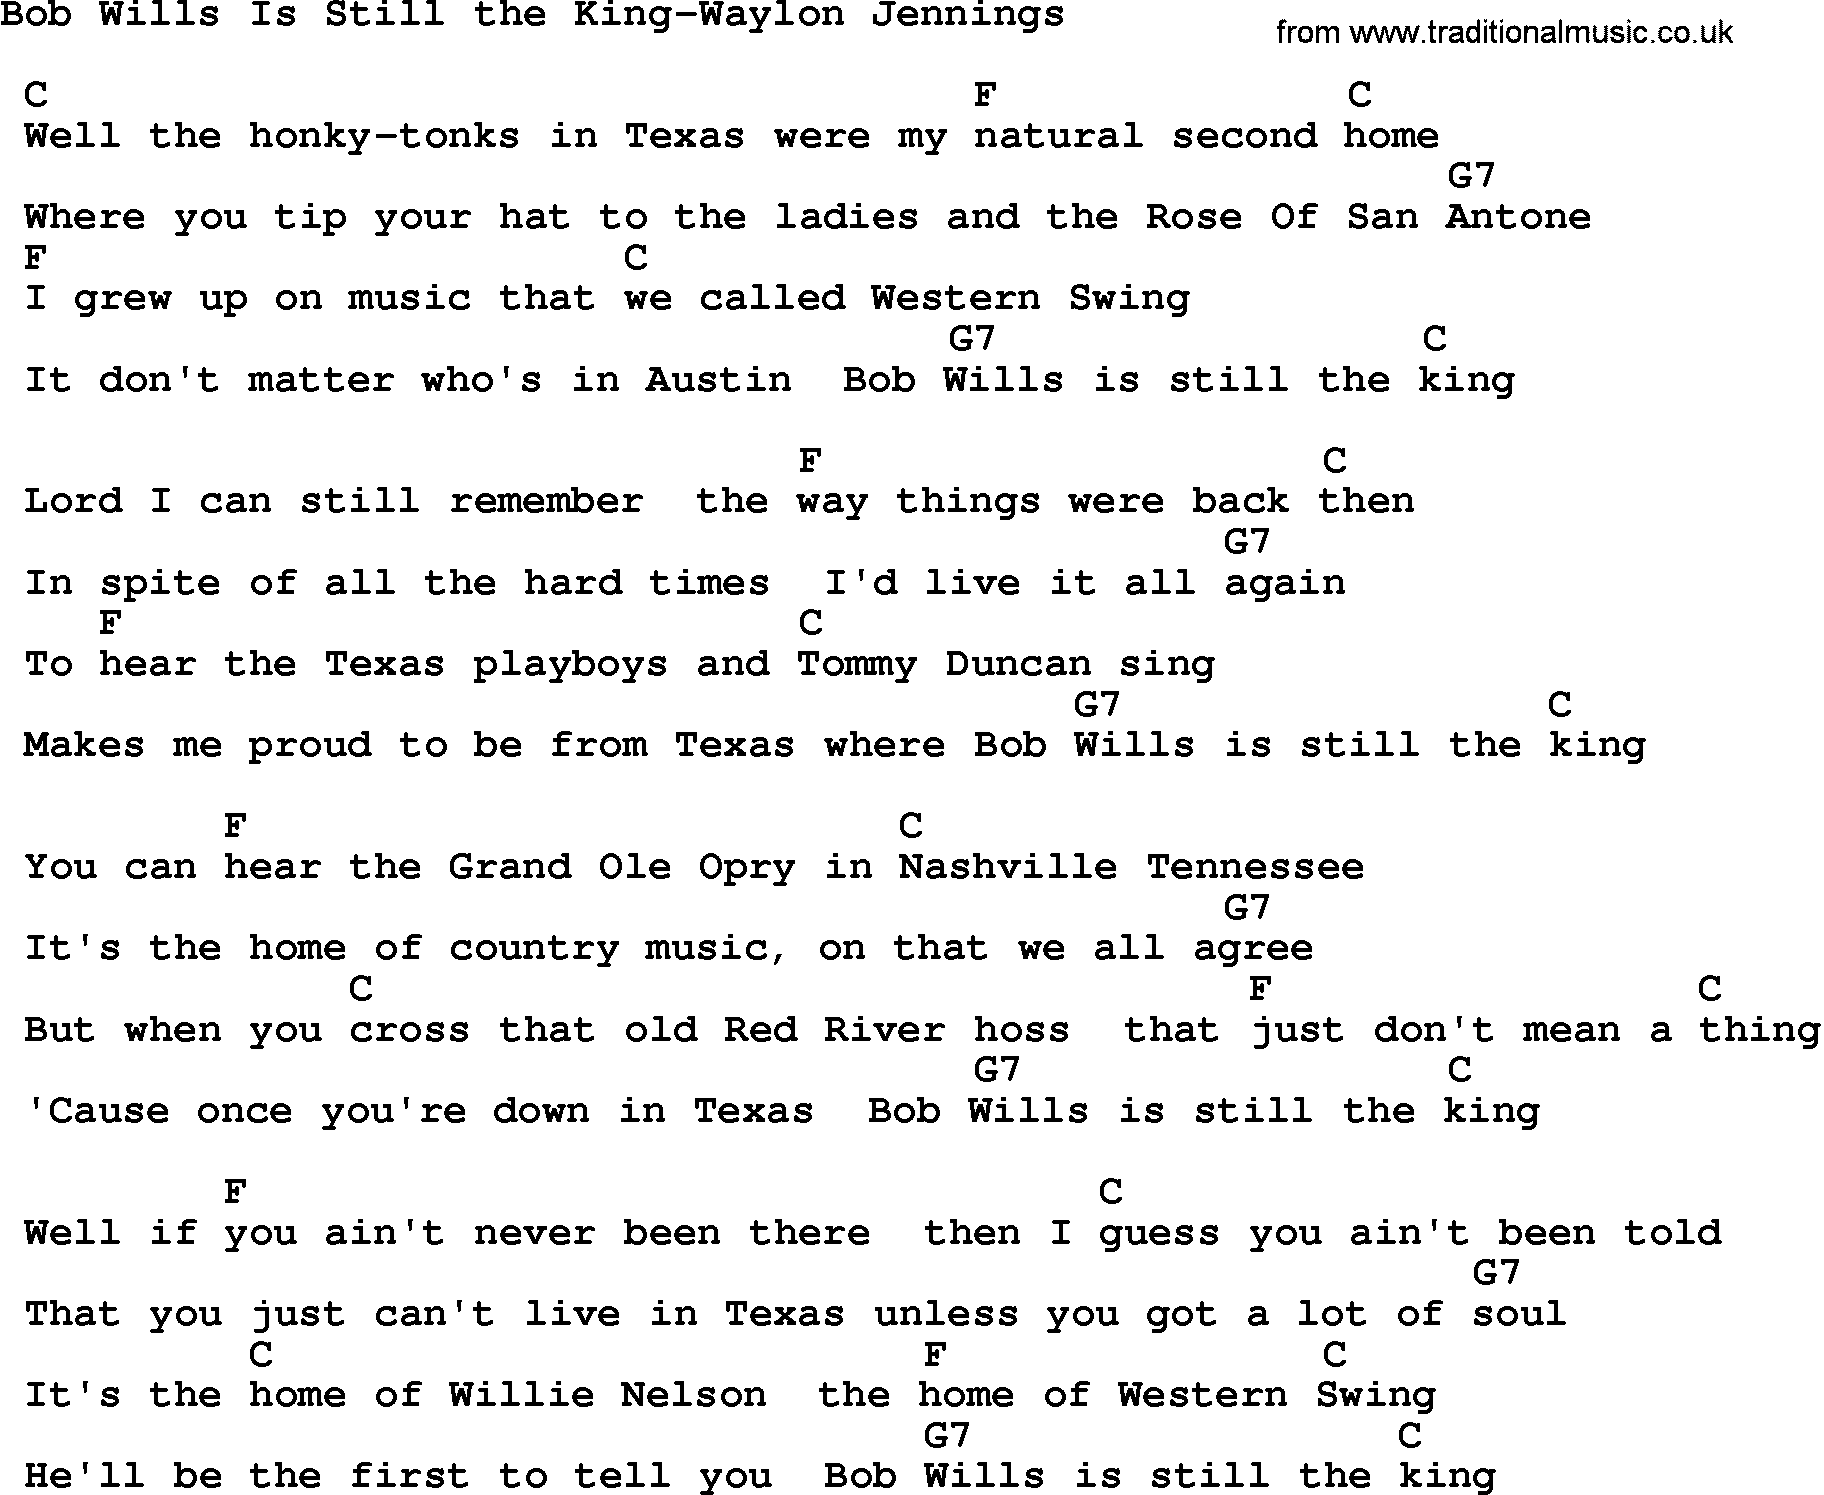 Country music song: Bob Wills Is Still The King-Waylon Jennings lyrics and chords